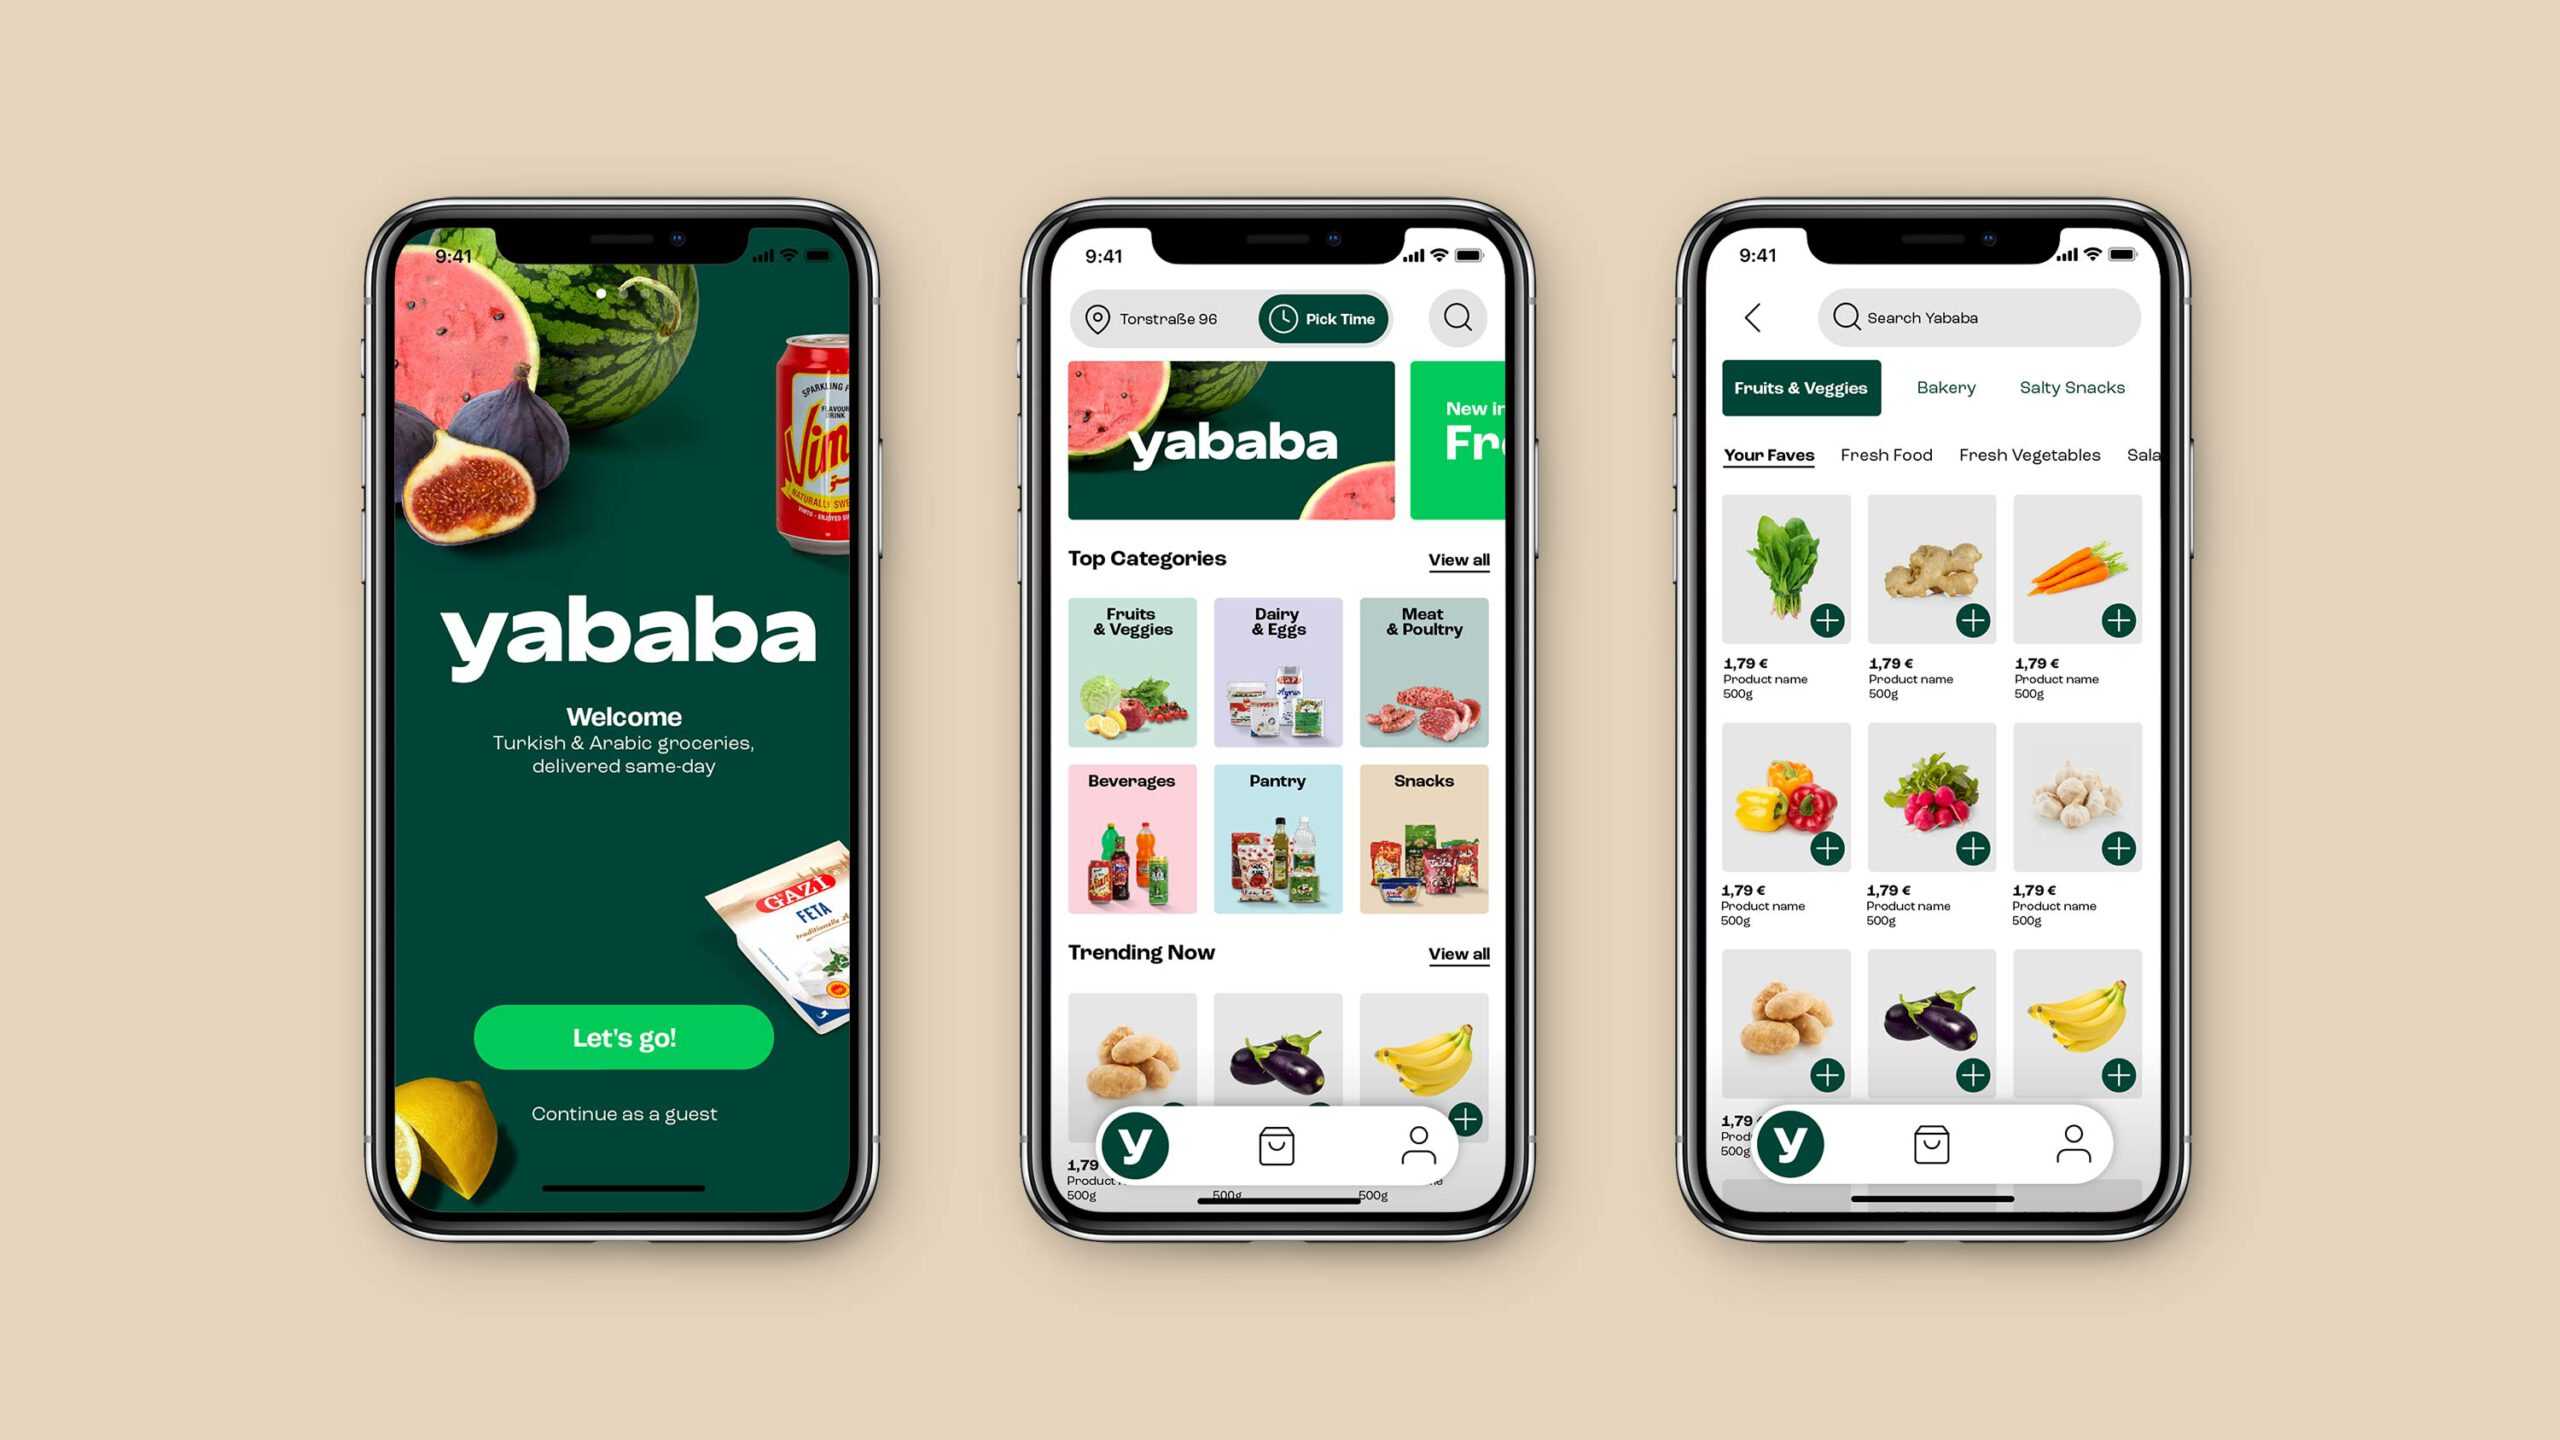 Phone screen mockup of the Yababa app